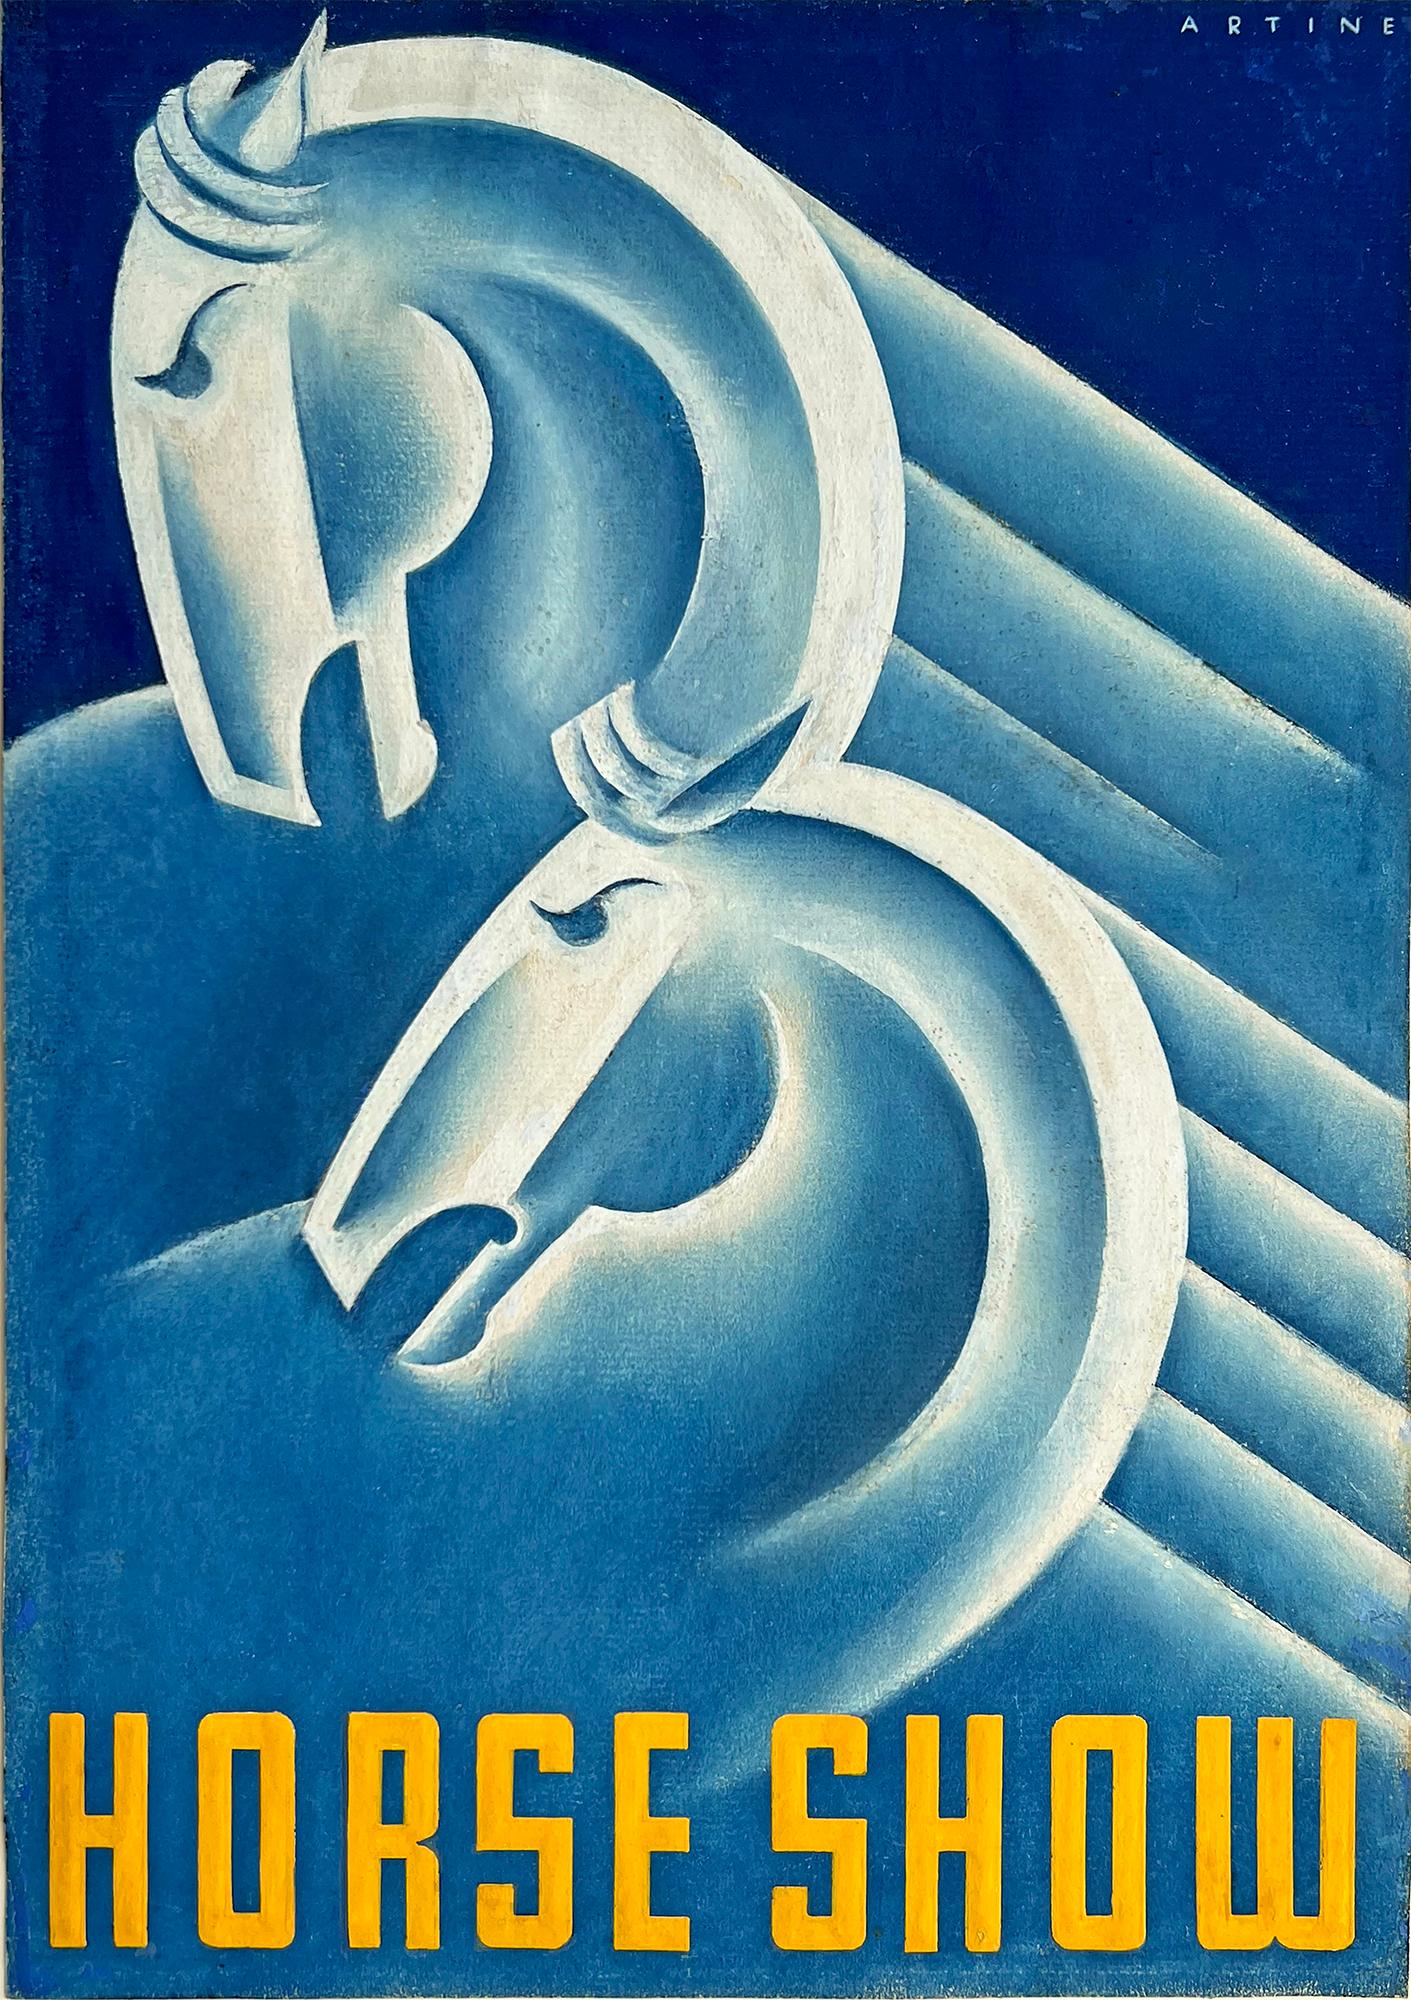 Art Deco Horses in Blue - Horse Show Illustration by Female Illustrator 